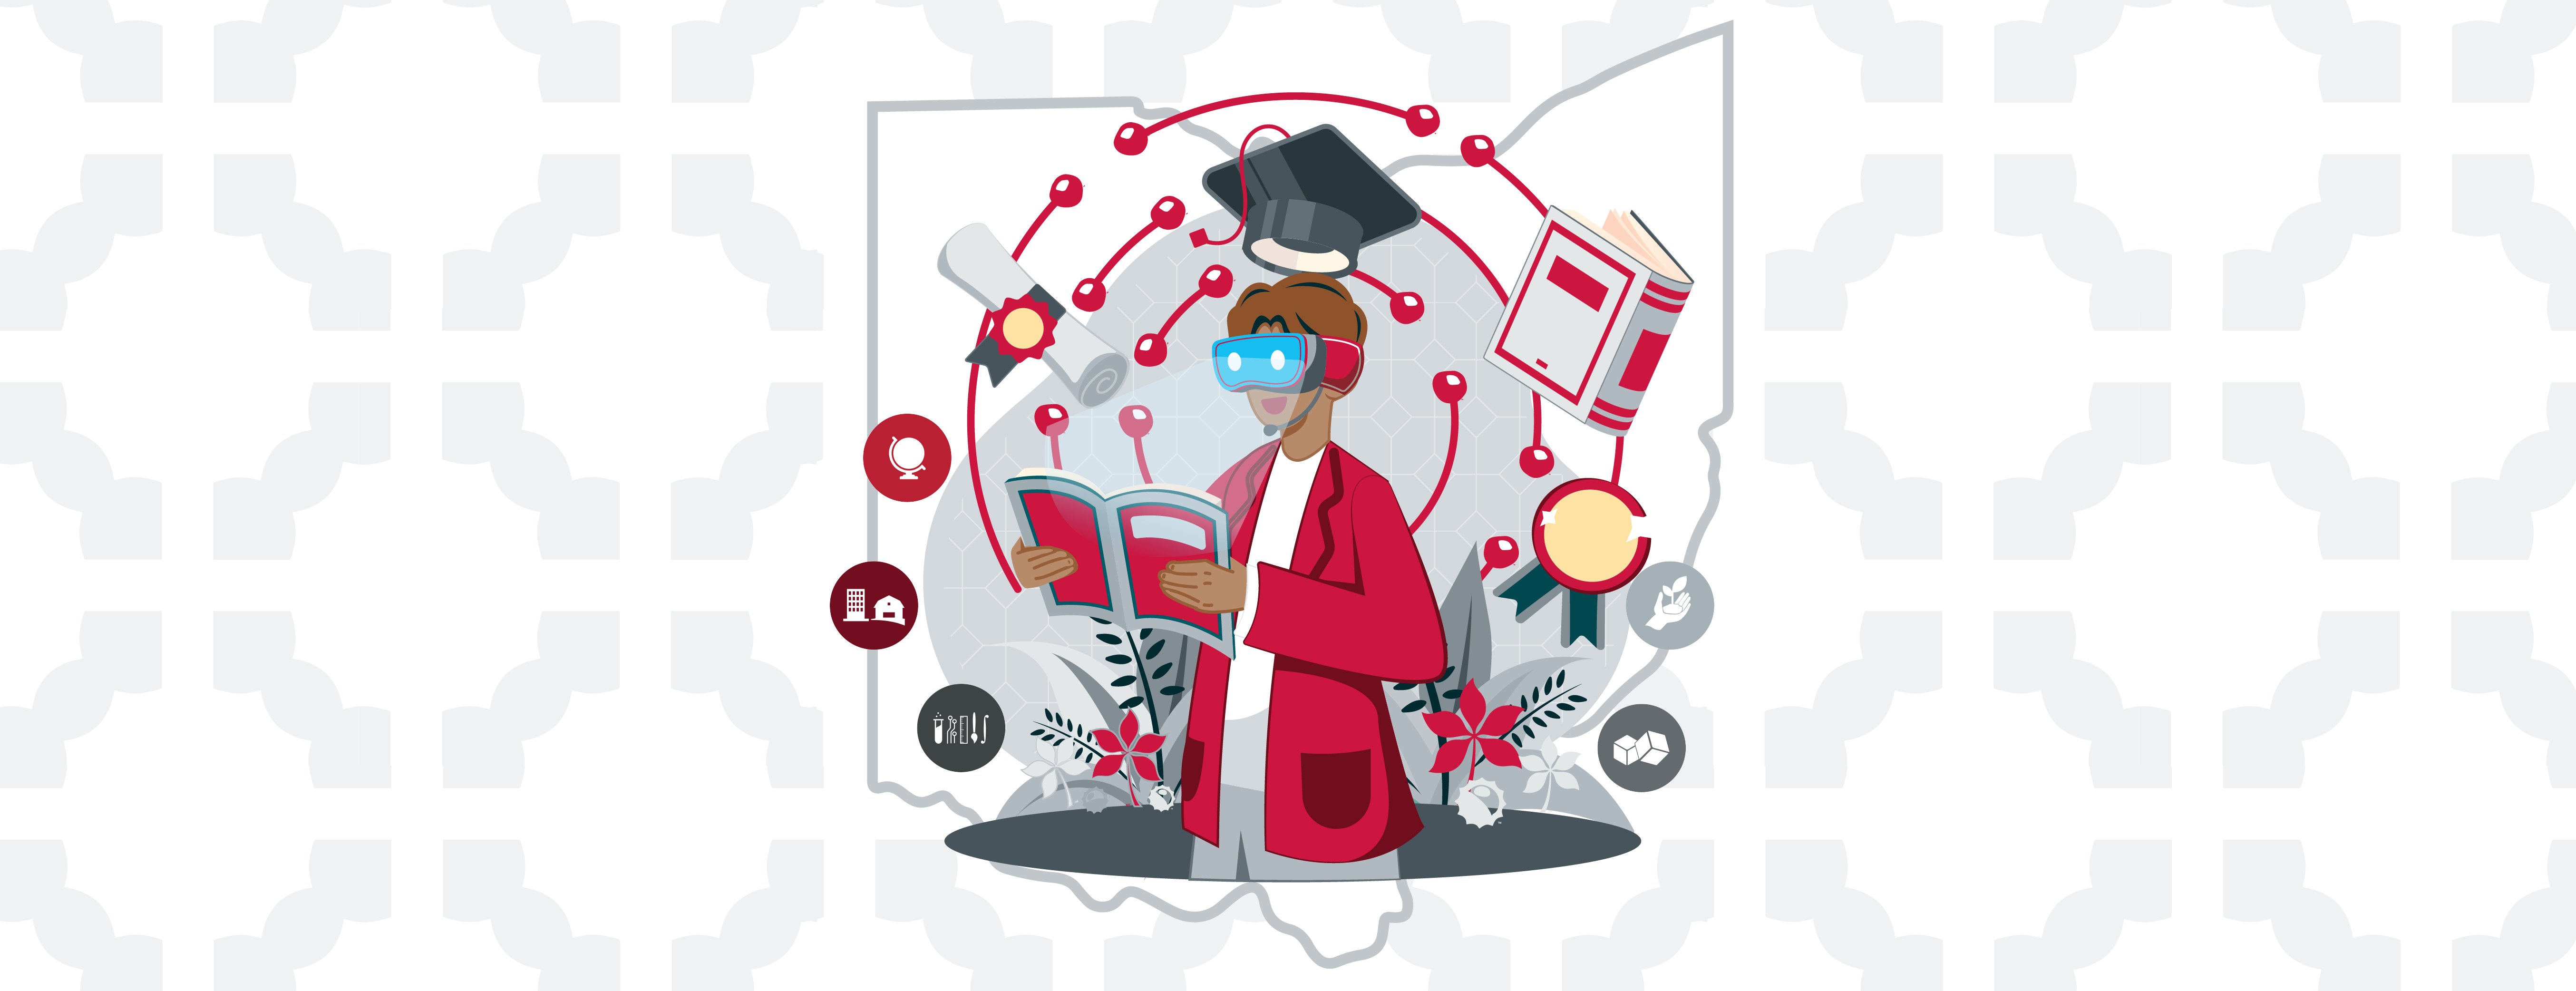 Ohio State illustration of student using VR